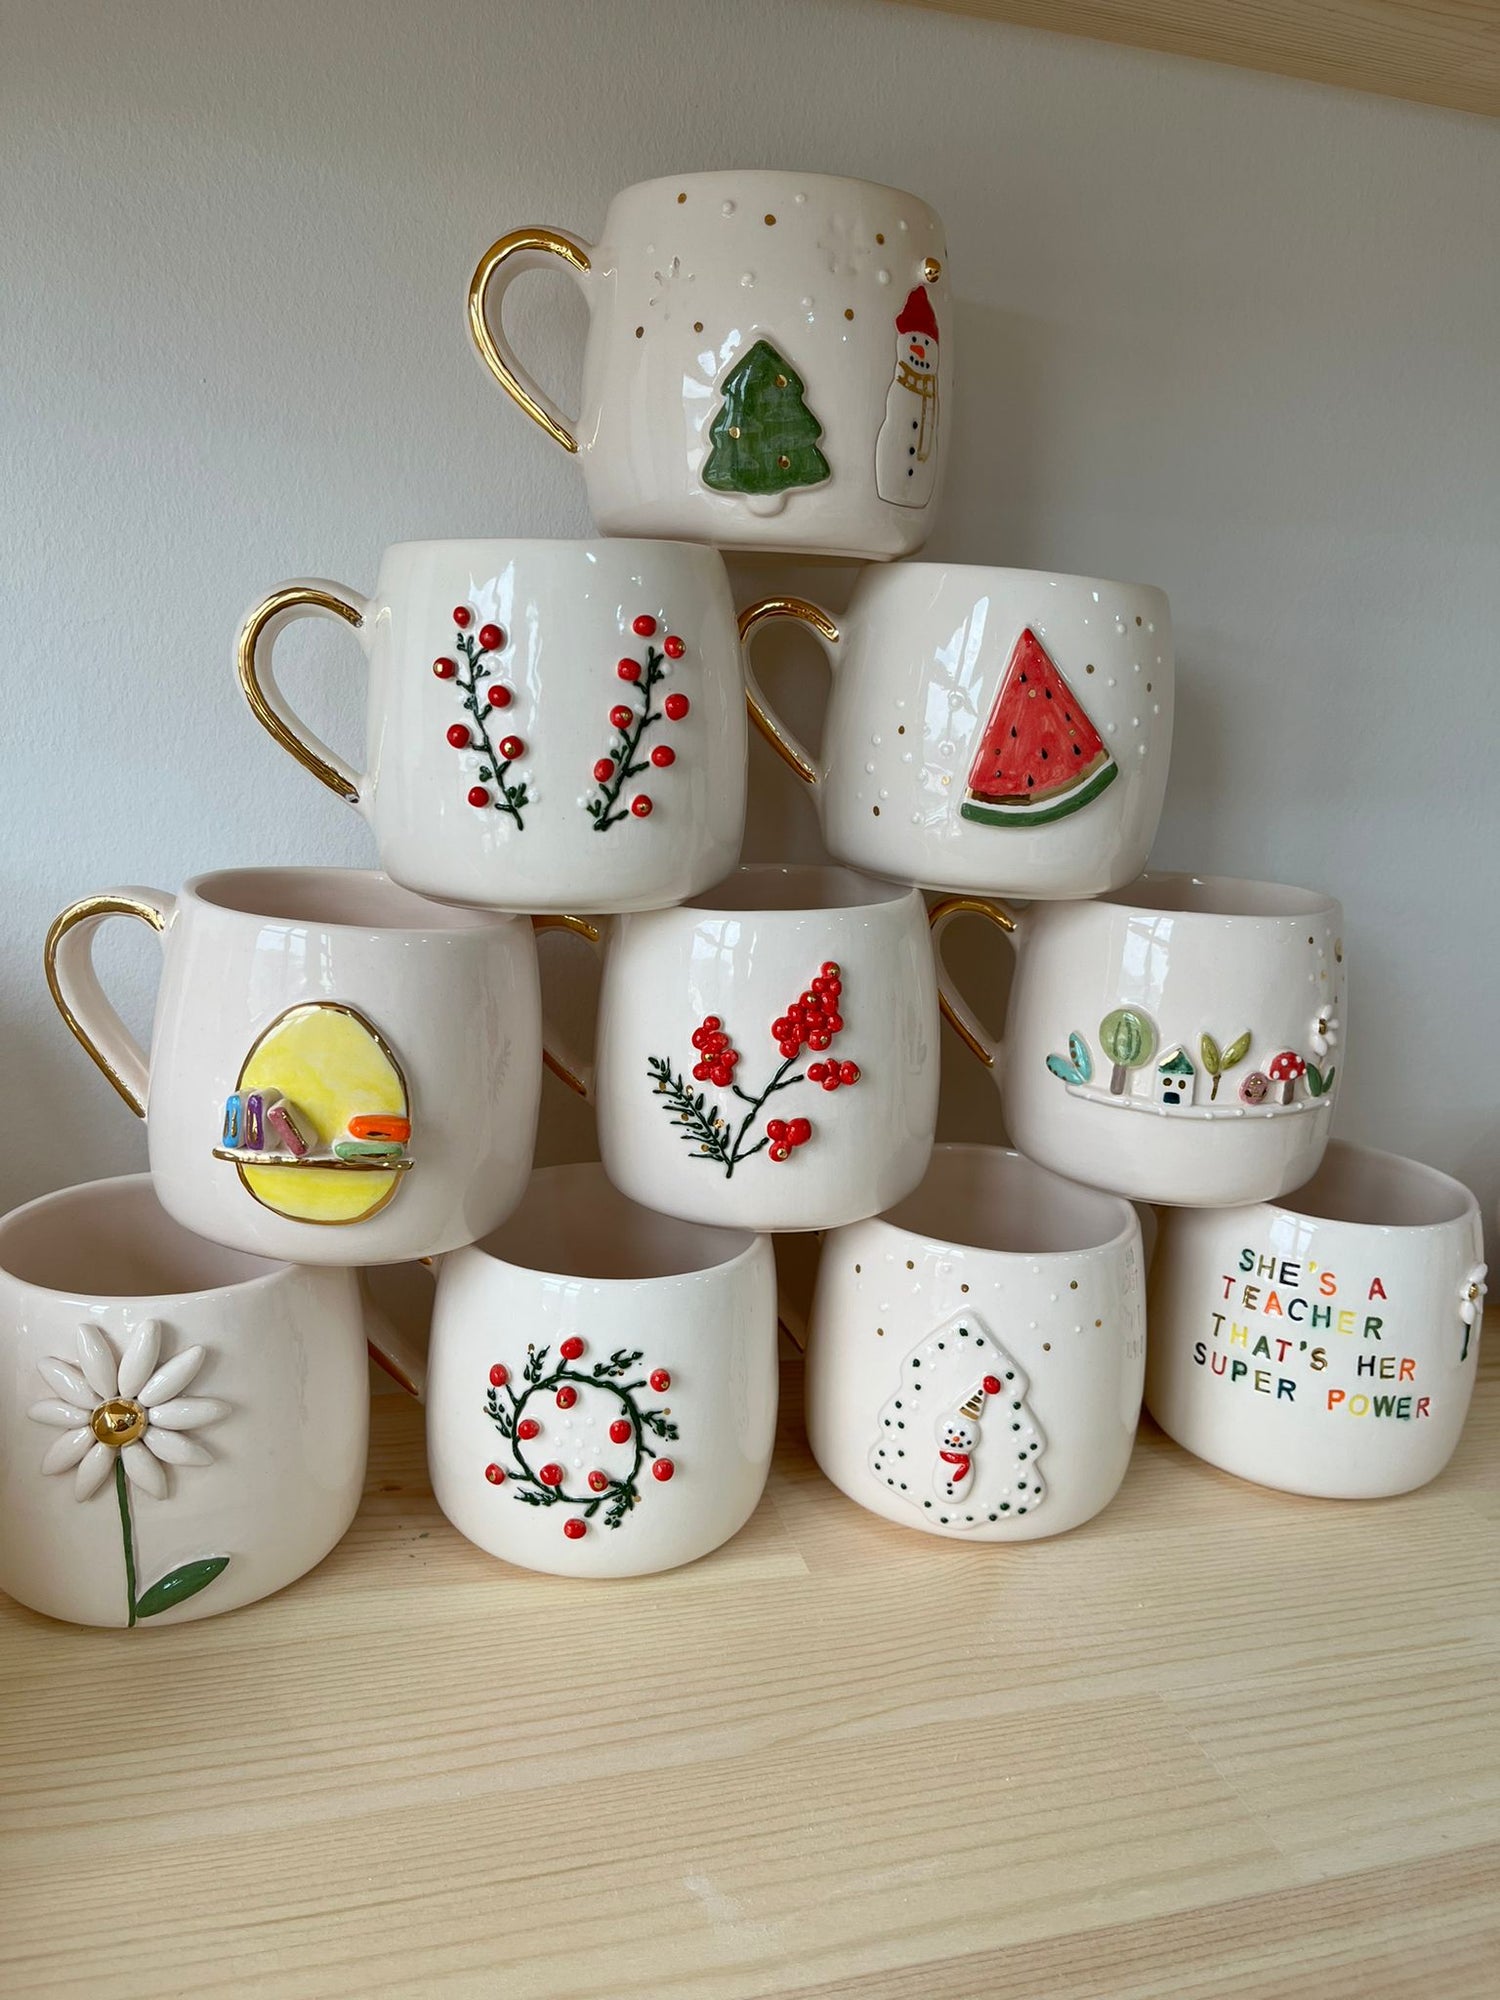 Handmade coffee mugs from Enjoy Ceramic Art